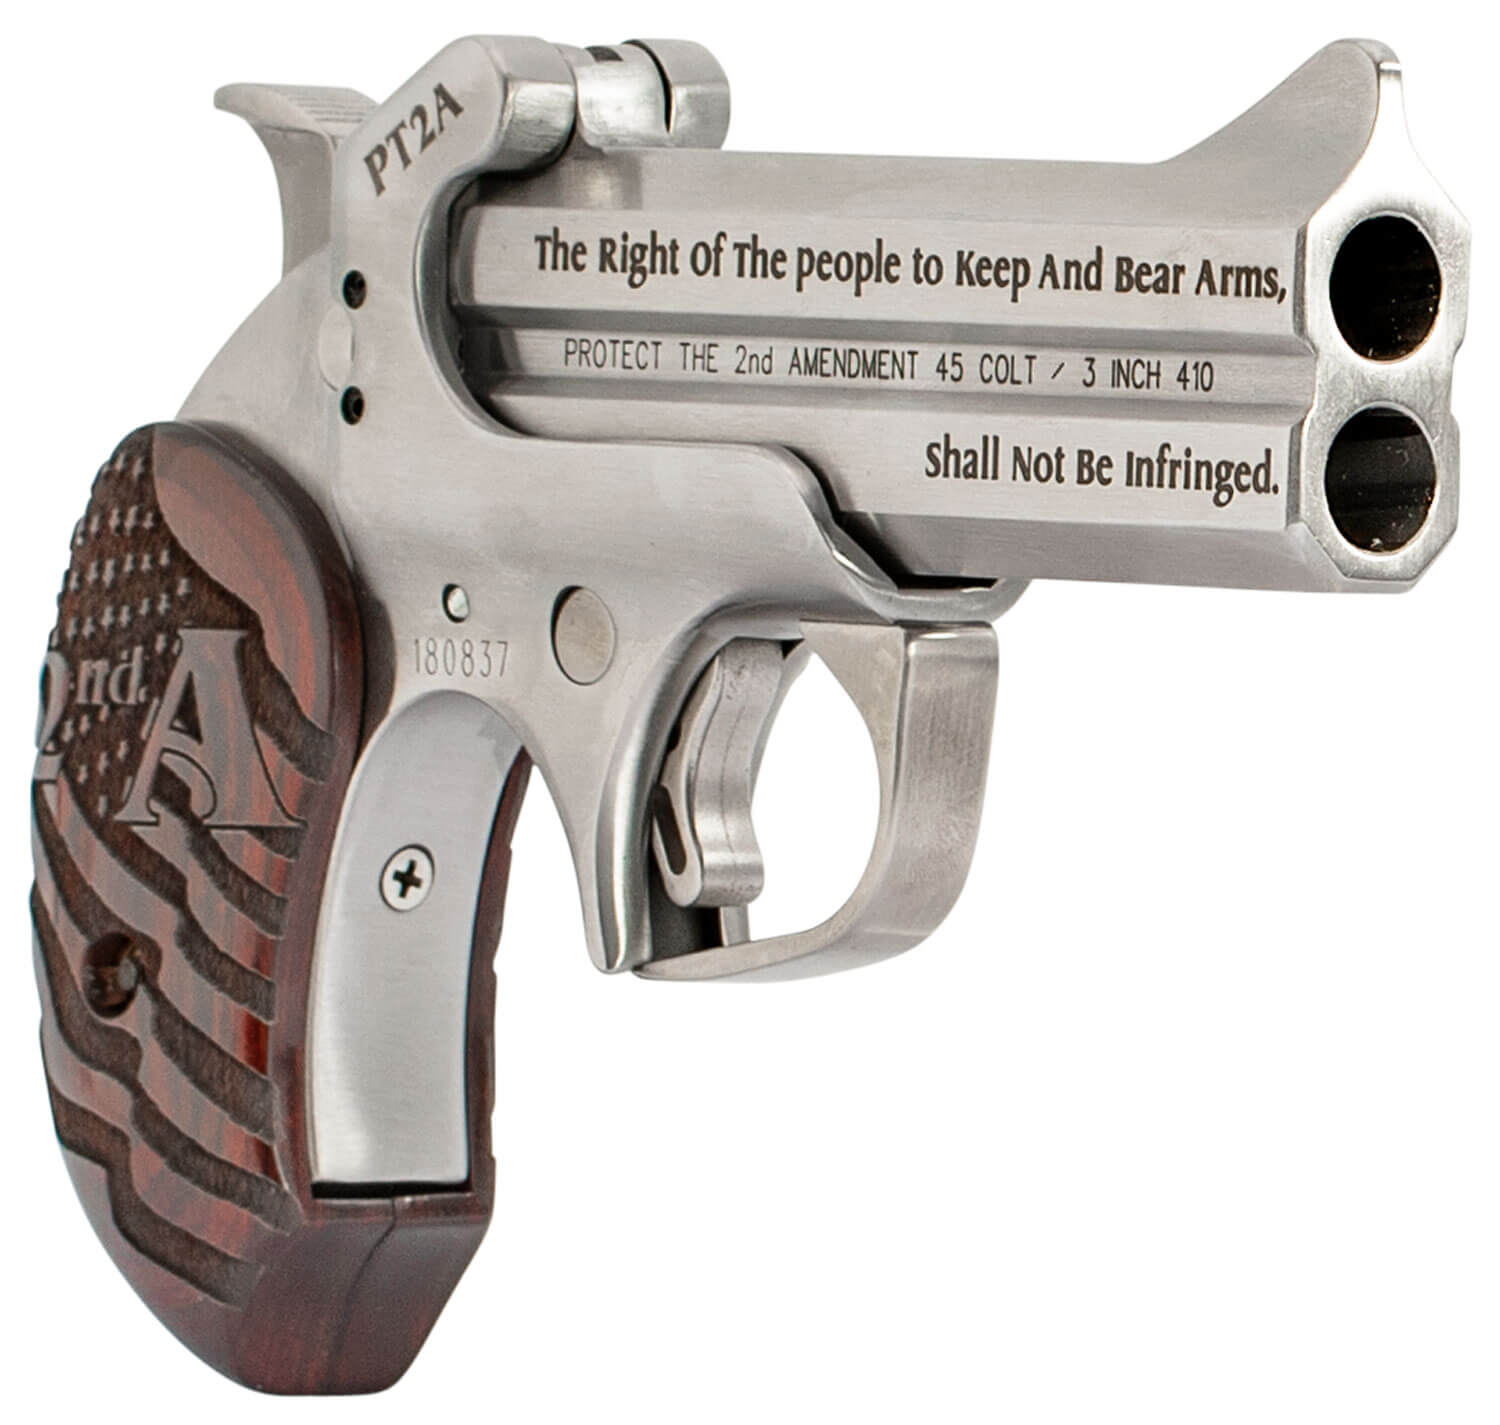 Bond Arms Pt2a Protect The 2nd Amendment Derringer Single 45 Colt Lc 410 Gauge 4 25 2 Round Stainless Steel Gunstuff